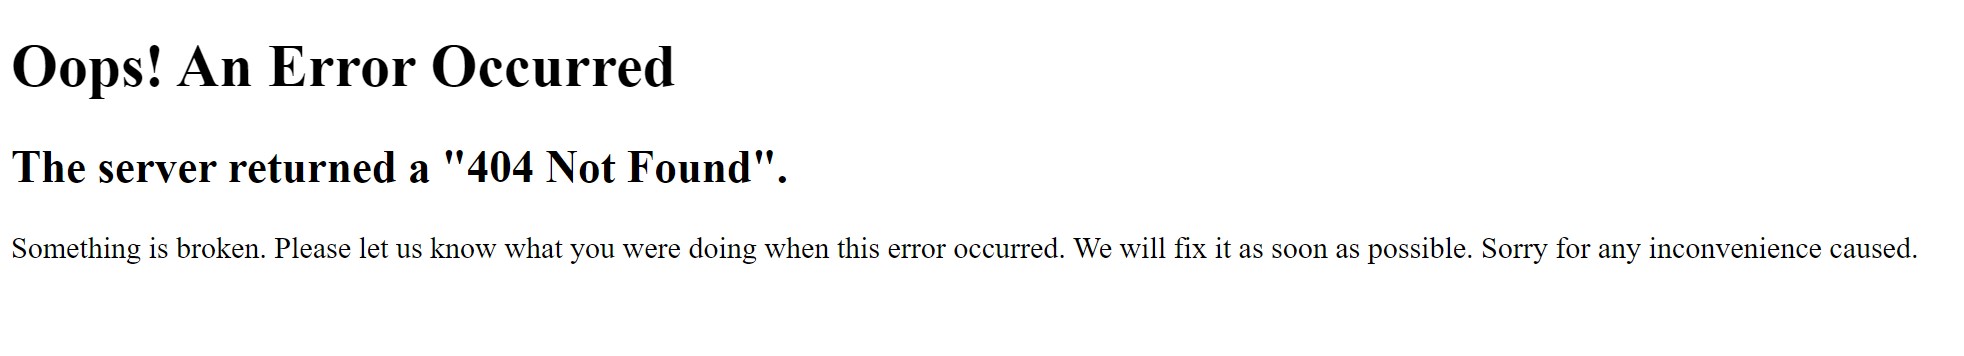 Internal server перевод на русский. Internal Server Error. Oops, an Error occurred.. Ошибка сервера иллюстрация. Oops! Server Error occured.